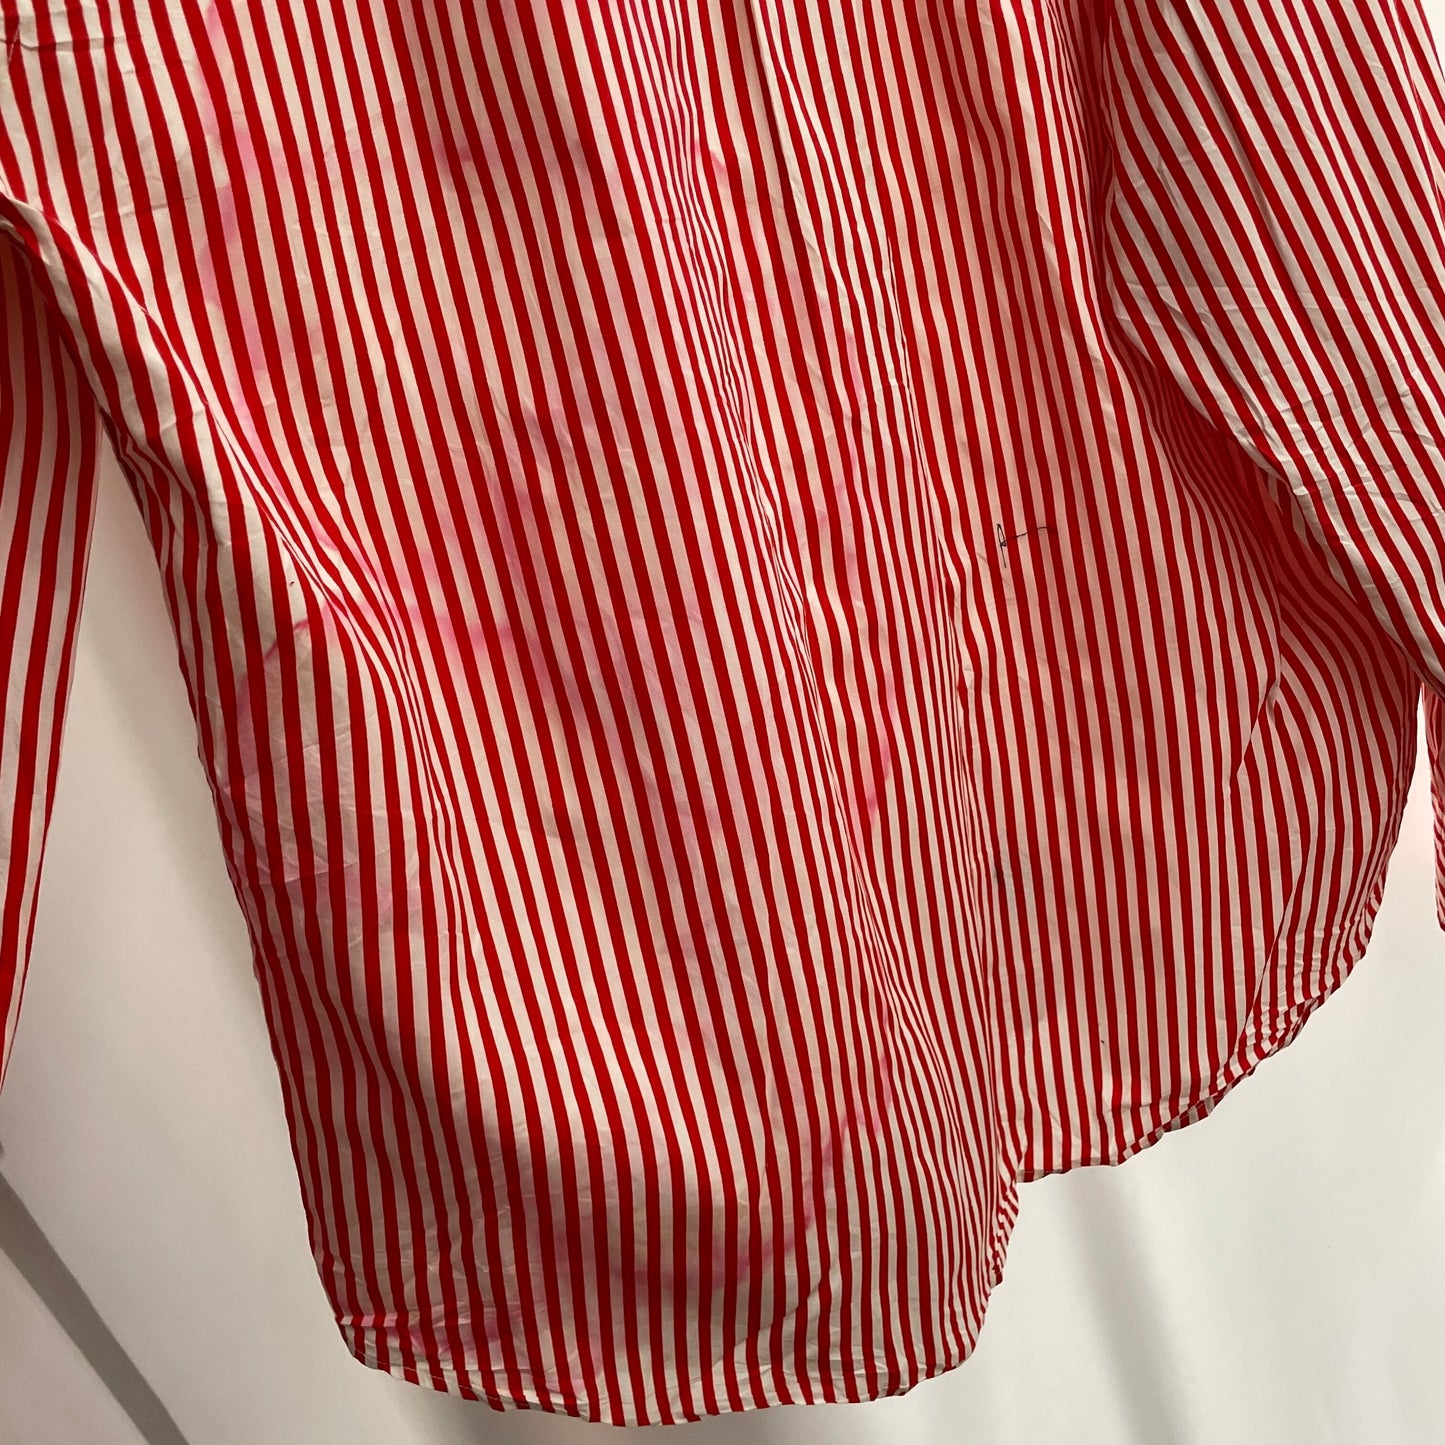 tommy hilfger shirt tommy hilfiger shirt stripe red